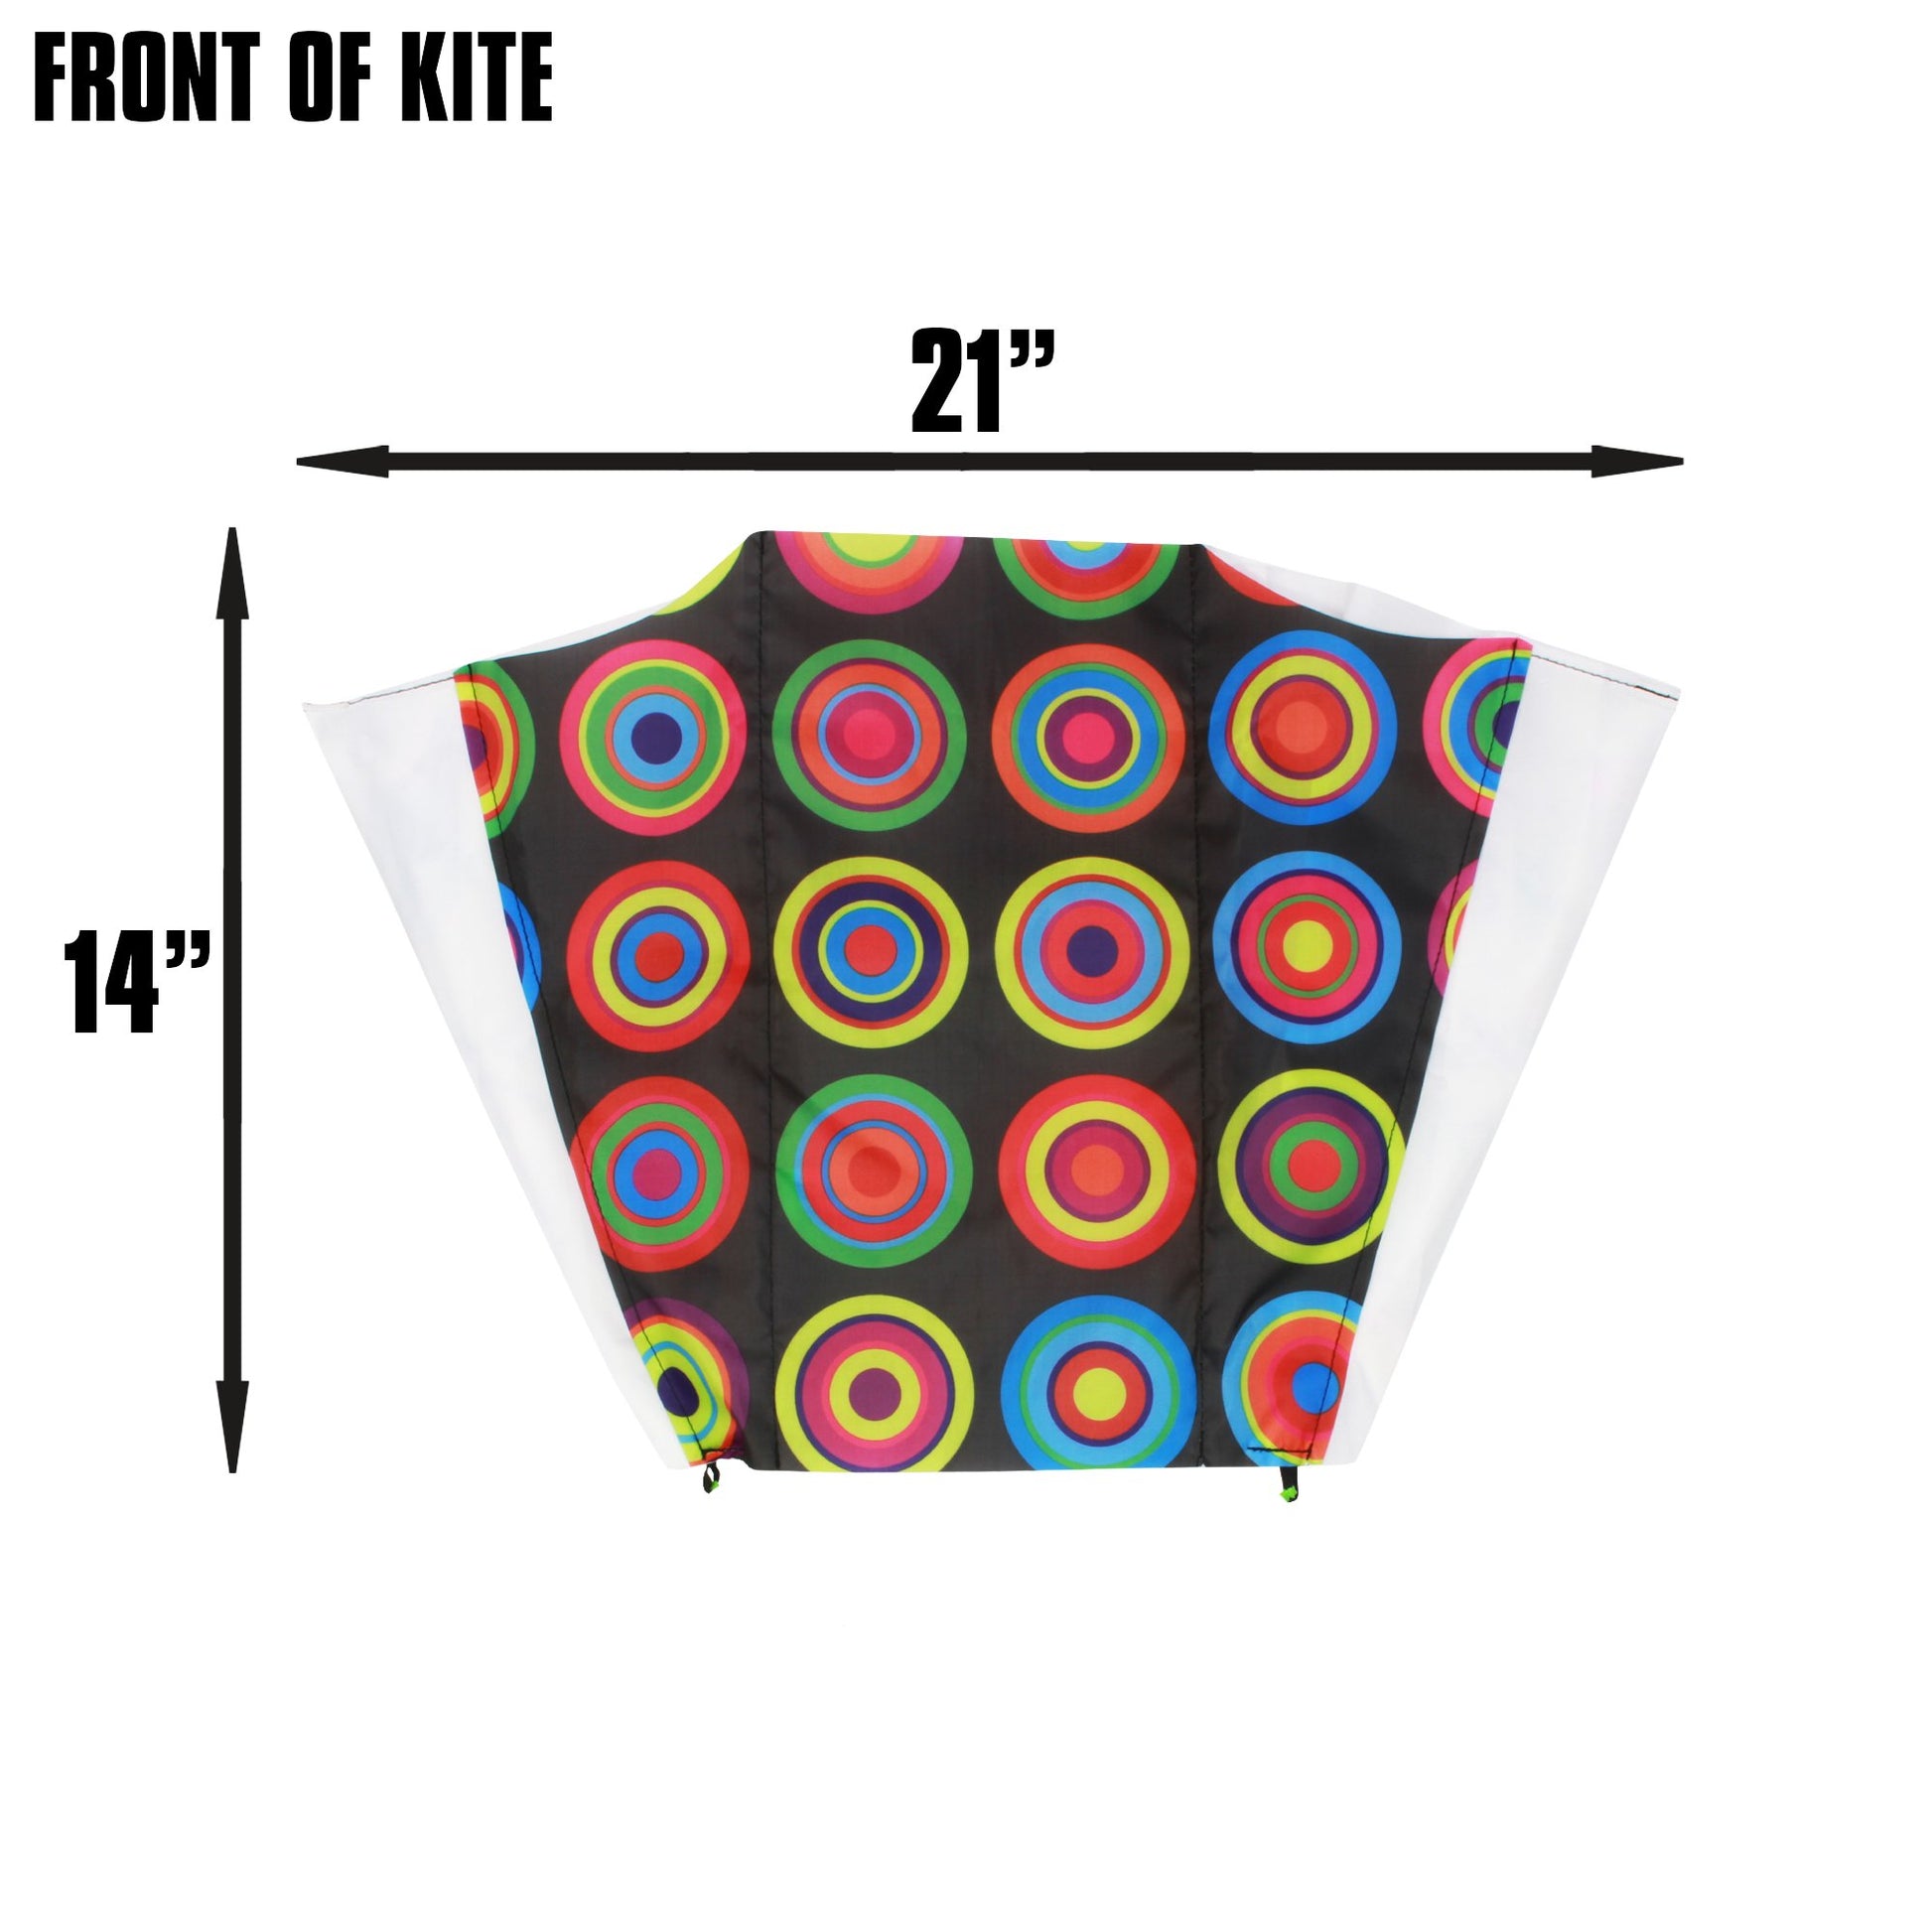 X Kites Pocket Kite Circles Nylon Kite dimensions